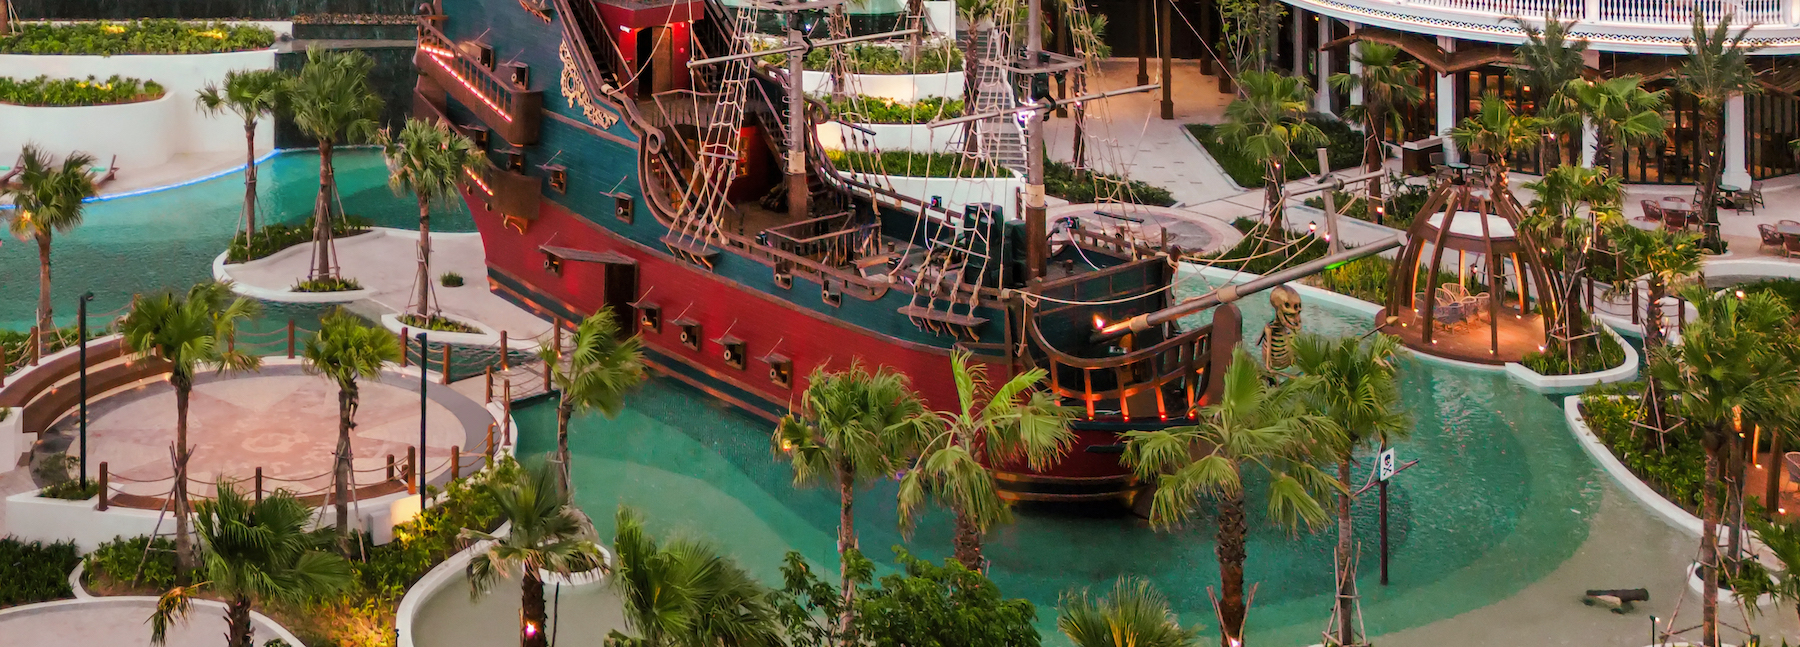 pirate themed family resort